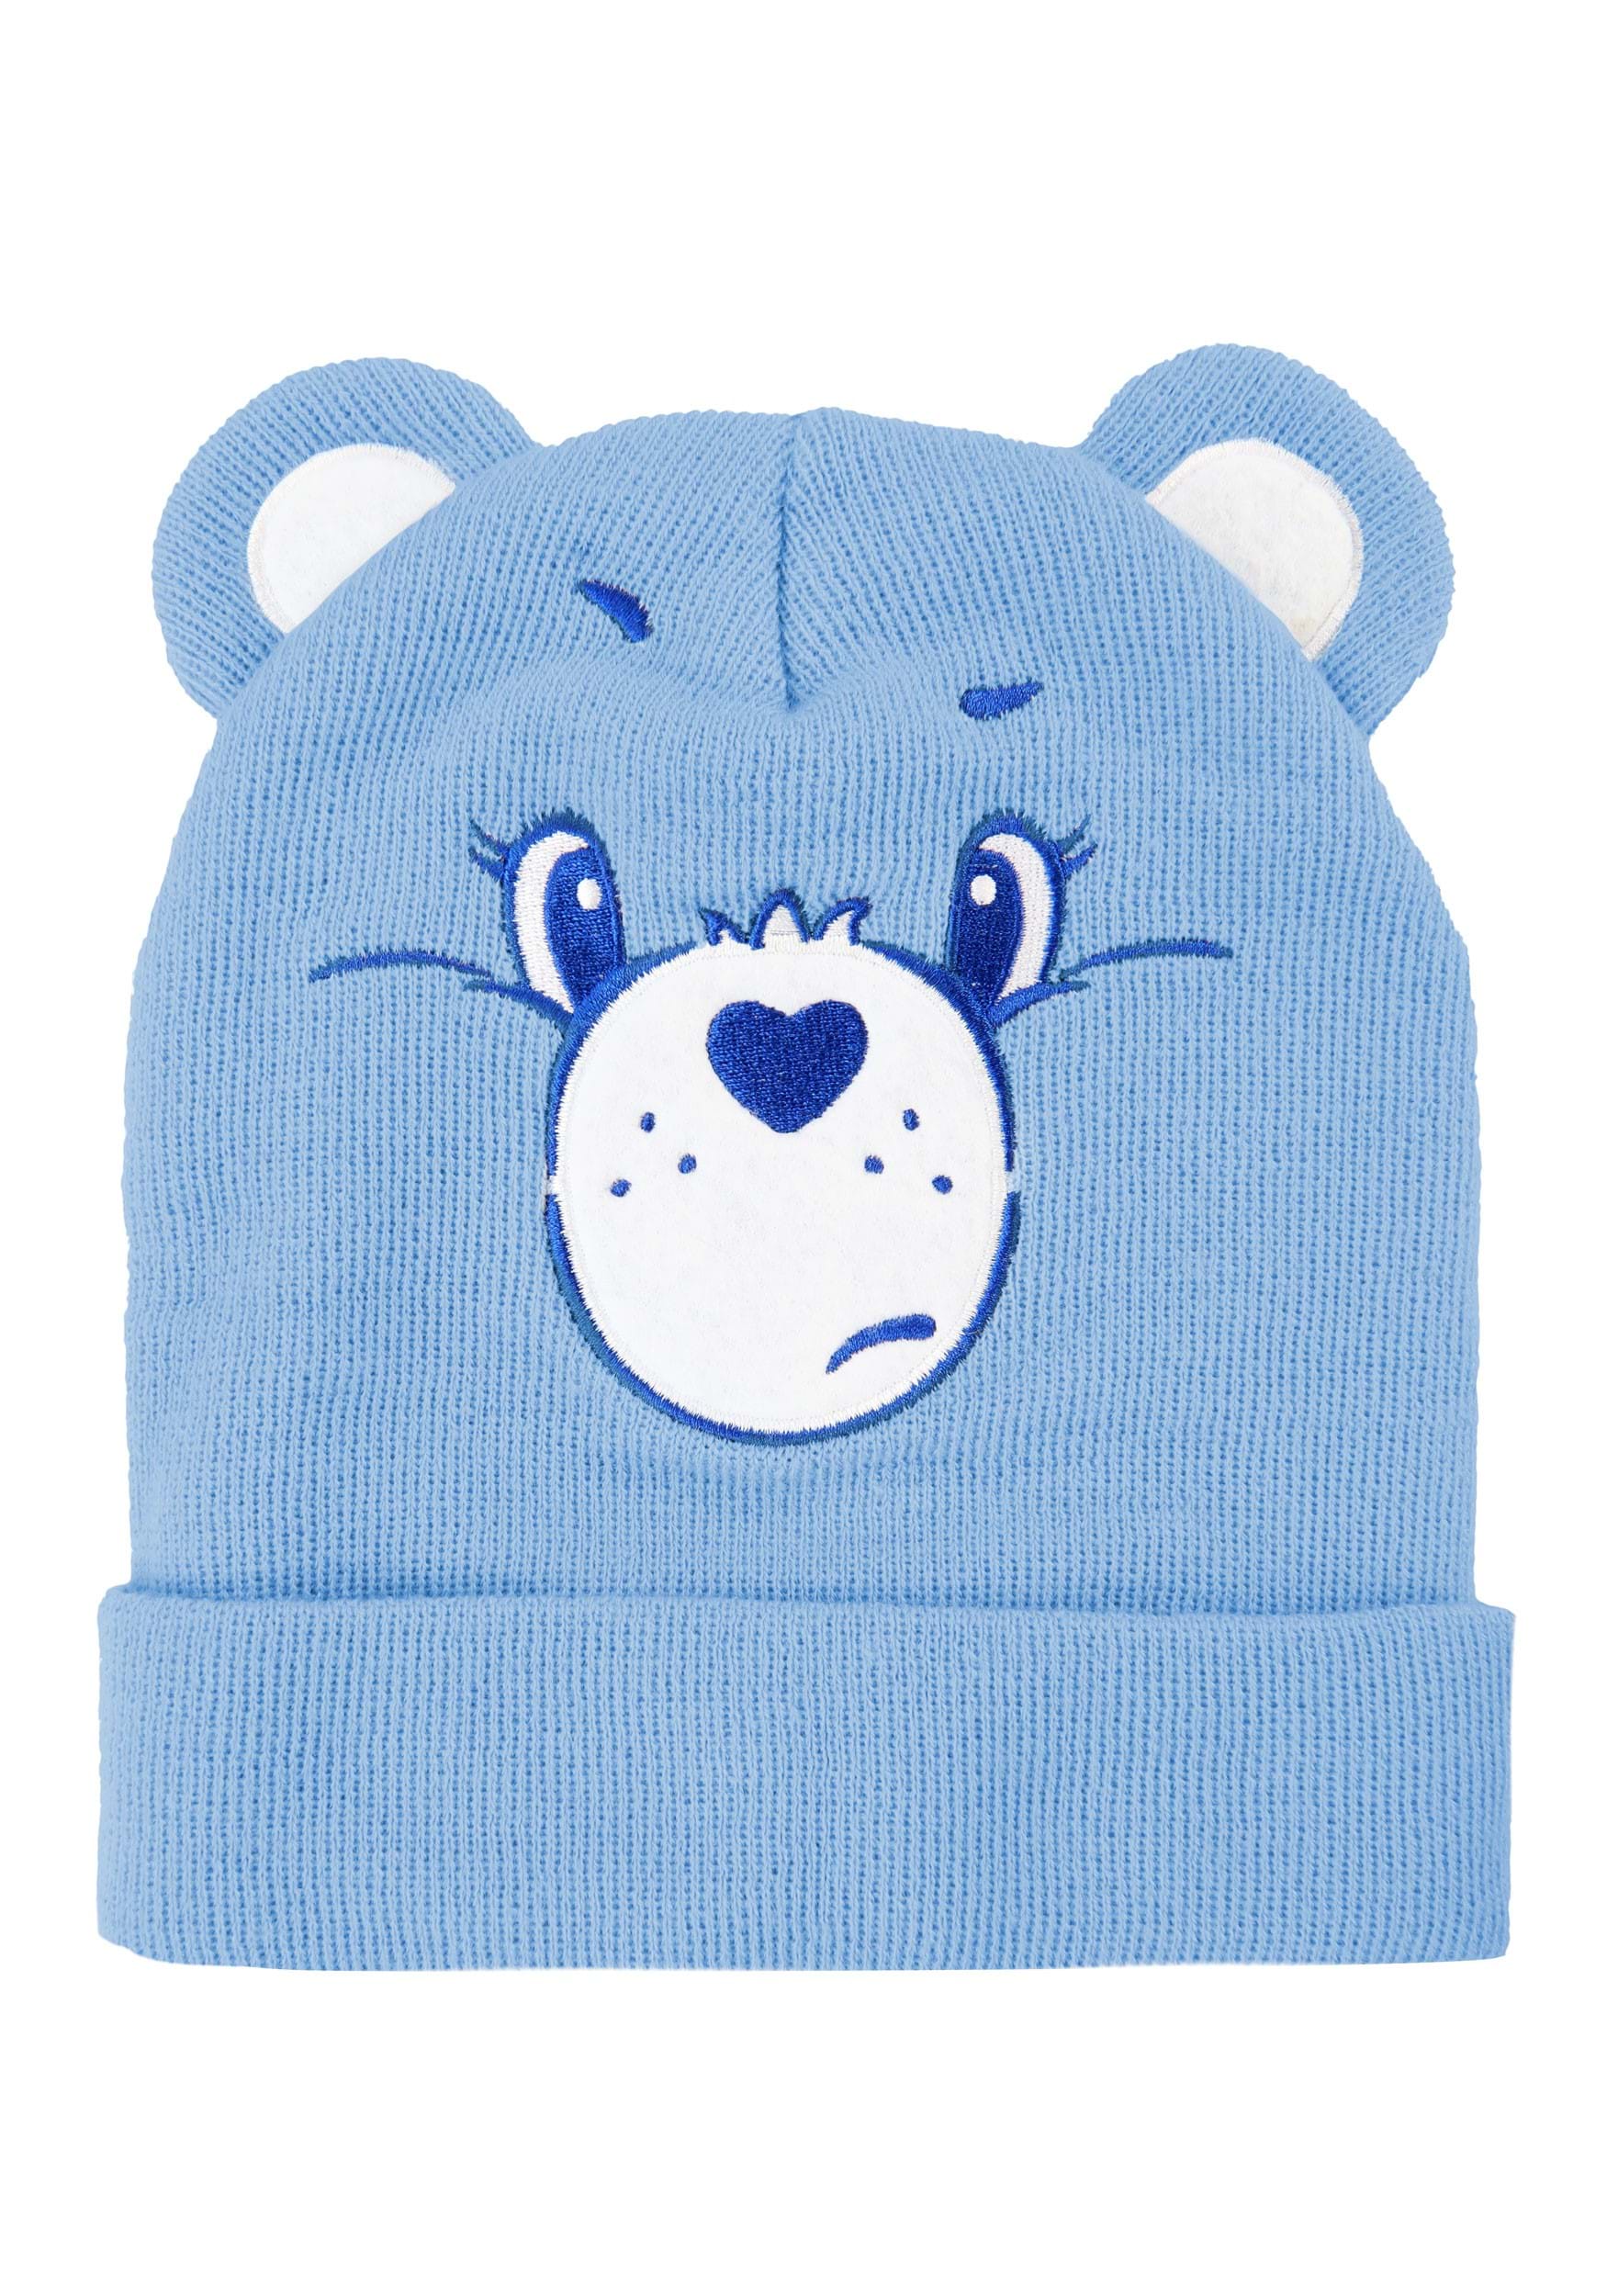 Care Bears Grumpy Bear Knit Hat